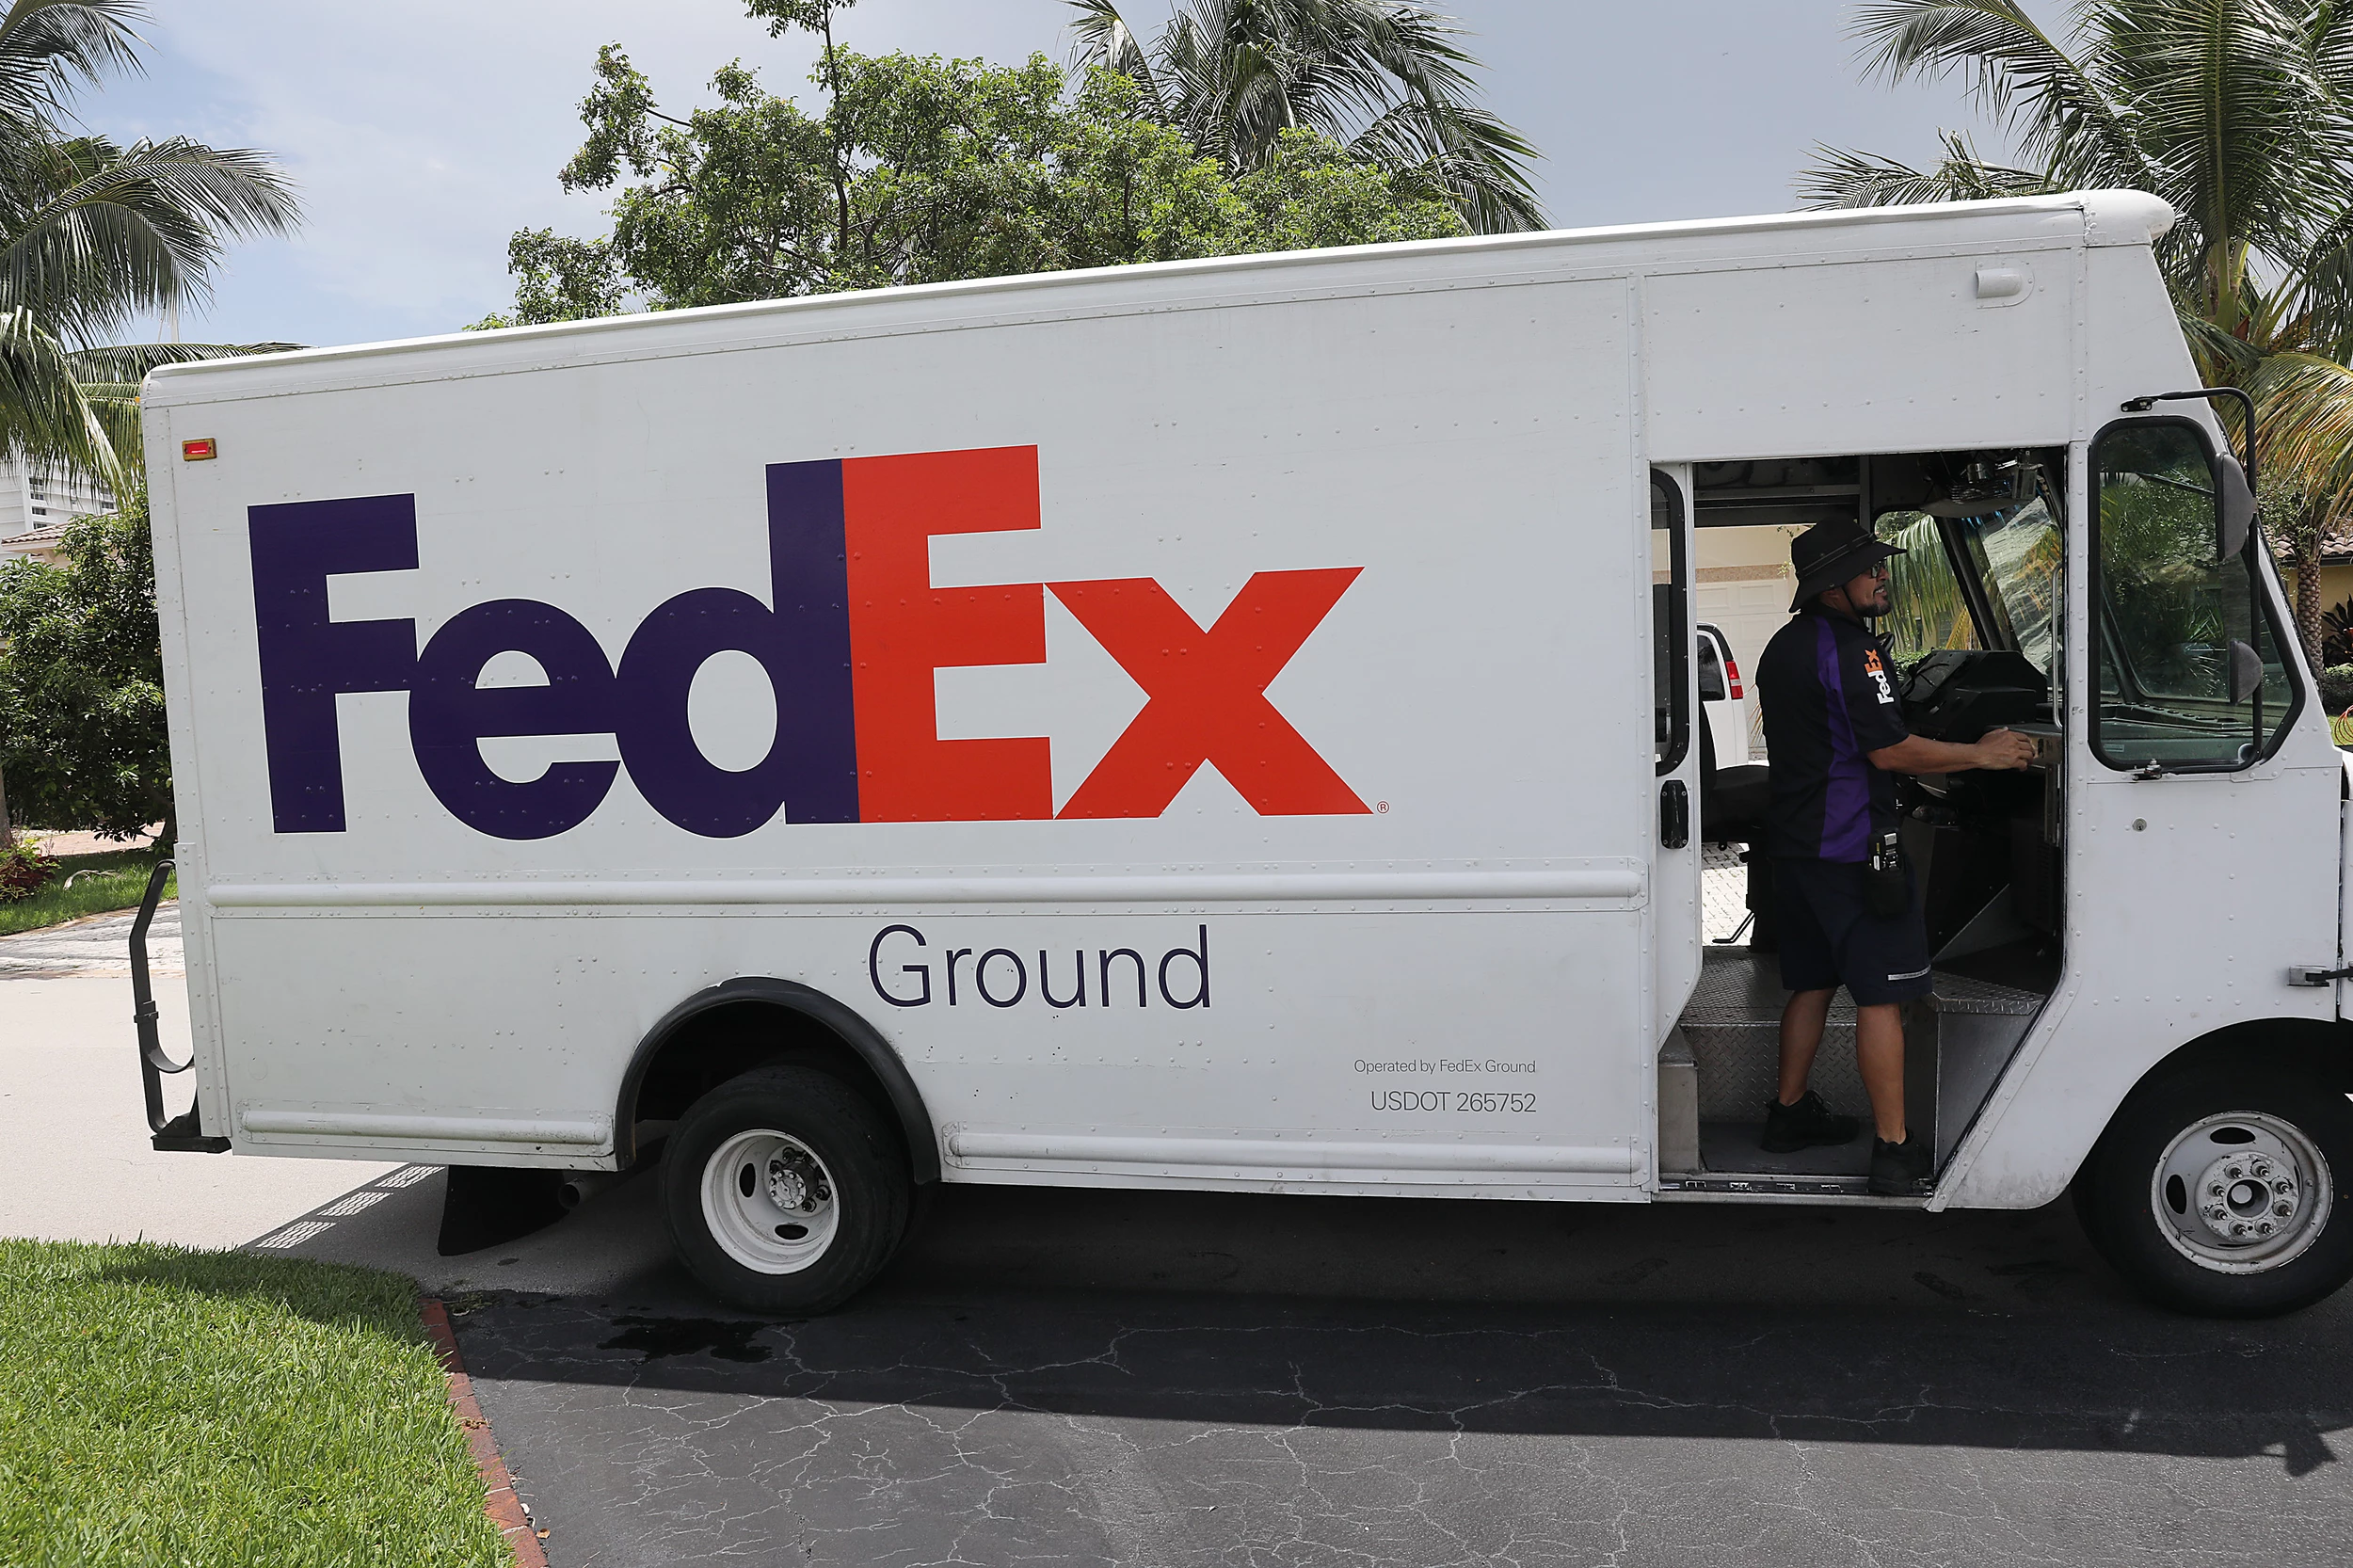 fedex ground tracking customer service